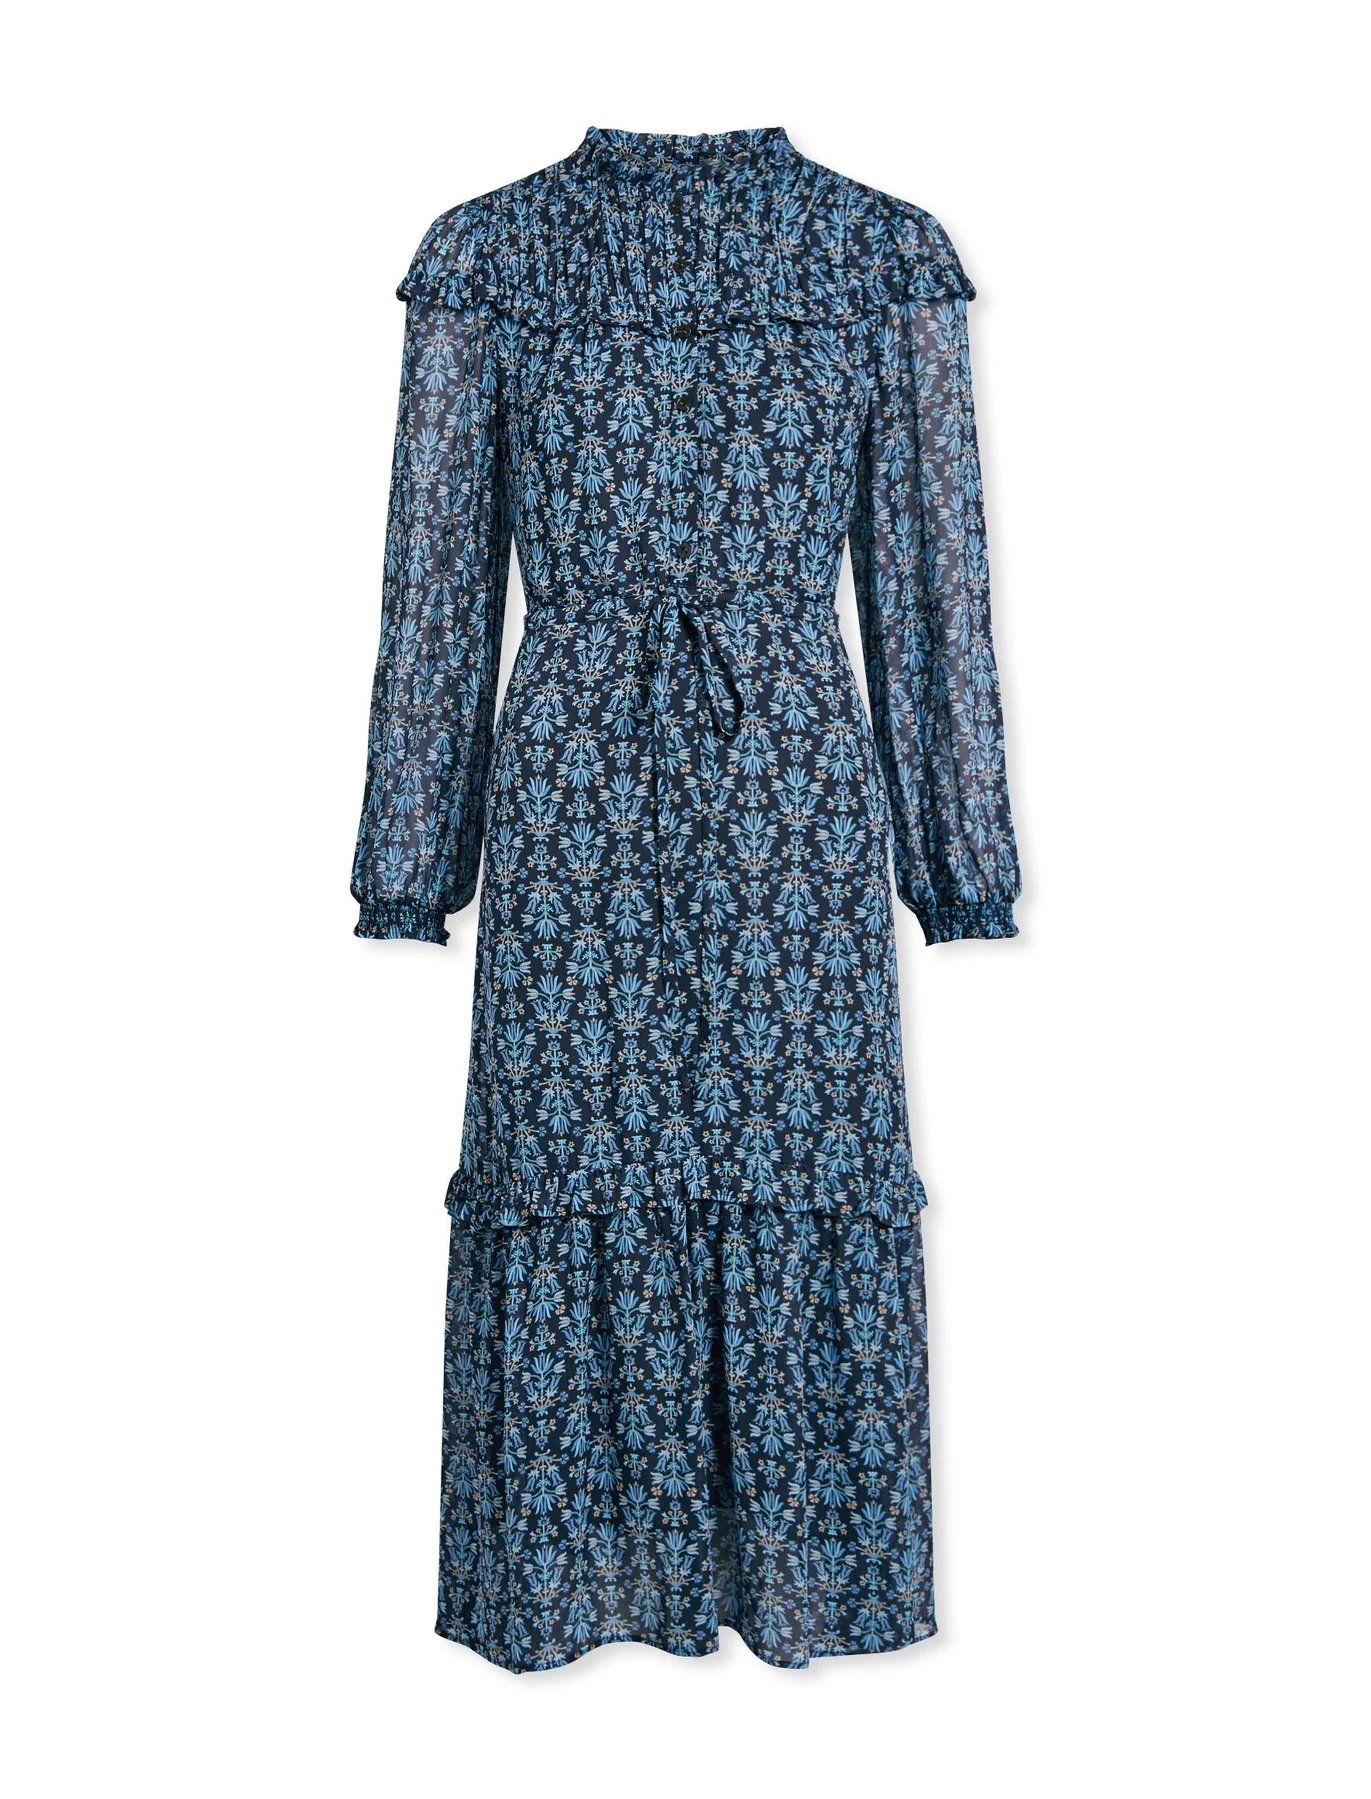 Cefinn Isla Maxi Dress in Blue Folk Floral Print.jpg